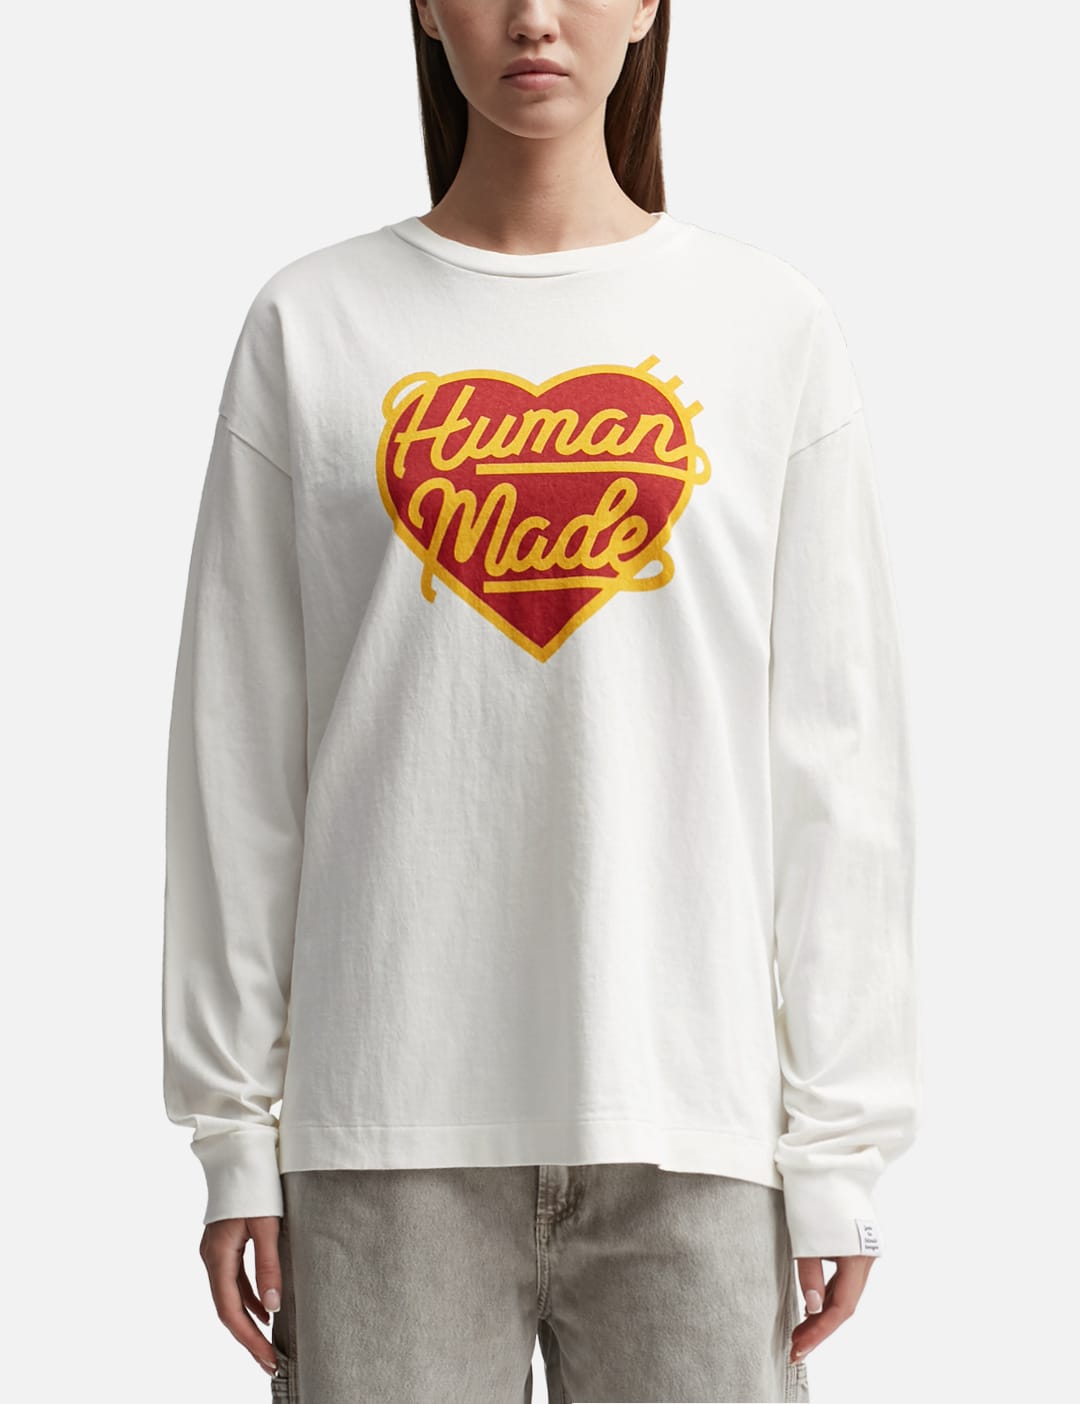 Human Made - Graphic Long Sleeve T-shirt #4 | HBX - Globally ...